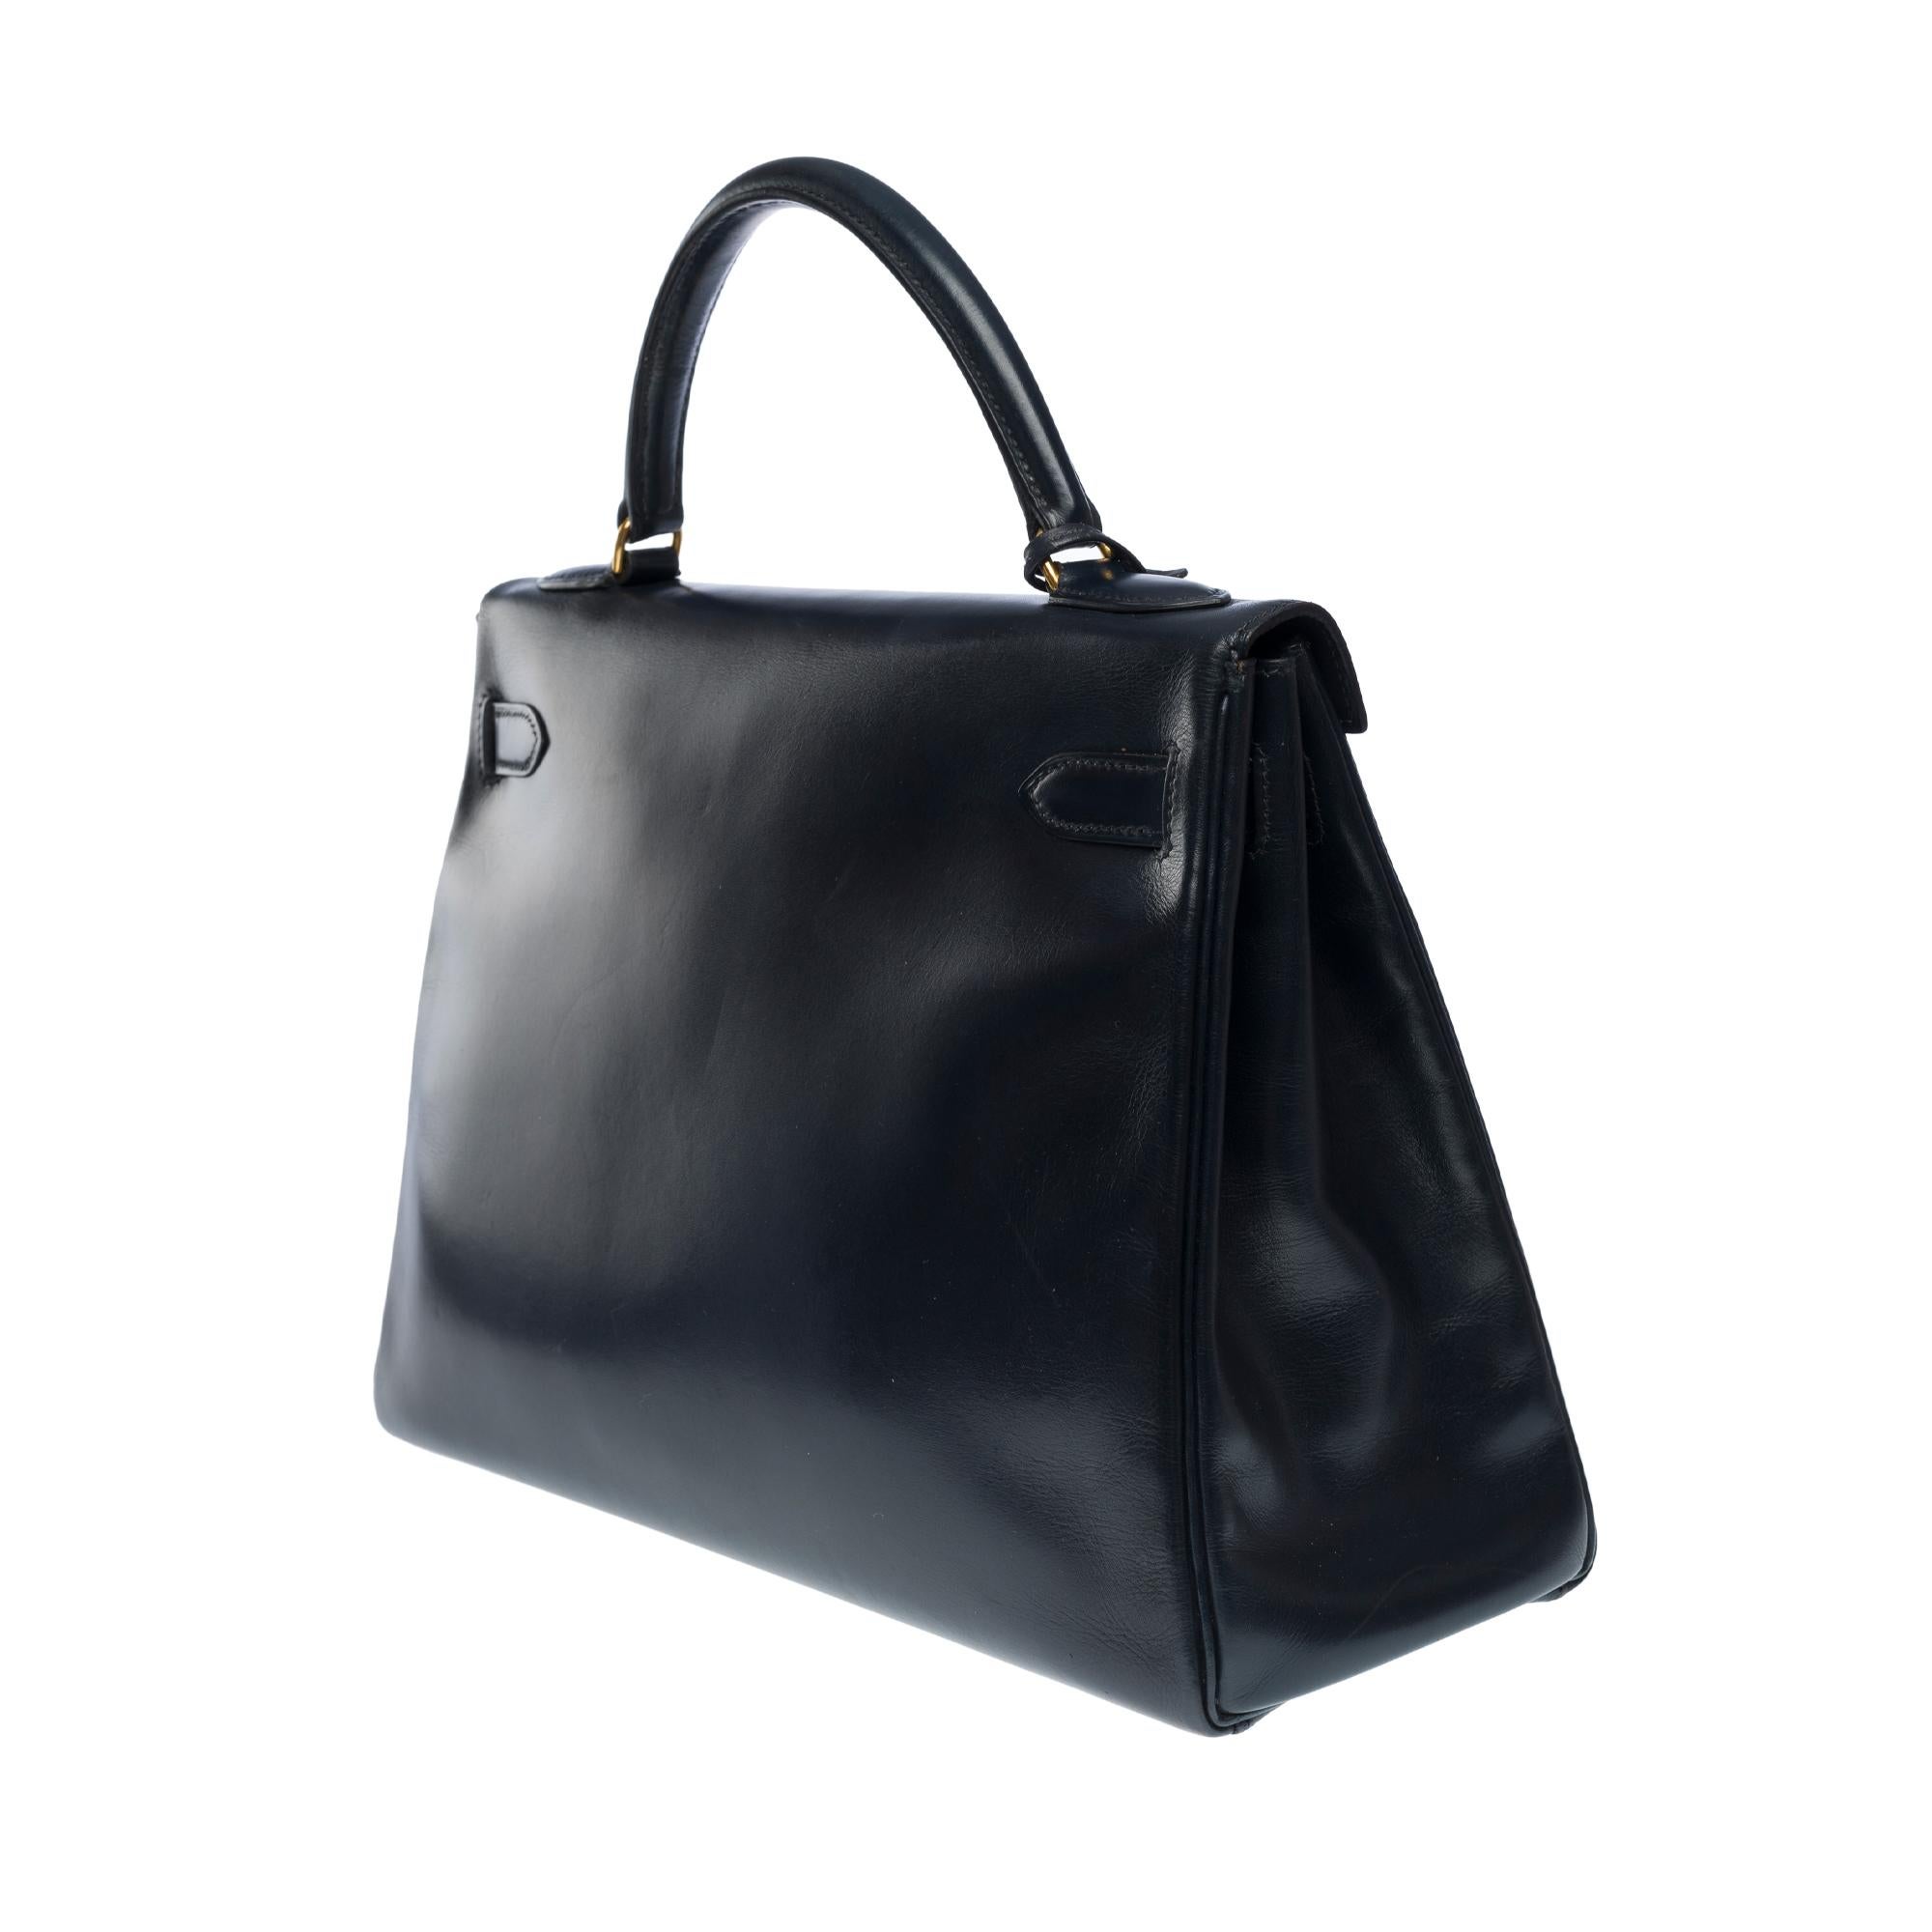 Hermès Kelly 32 retourne handbag strap in Navy Blue box calfskin leather, GHW 1